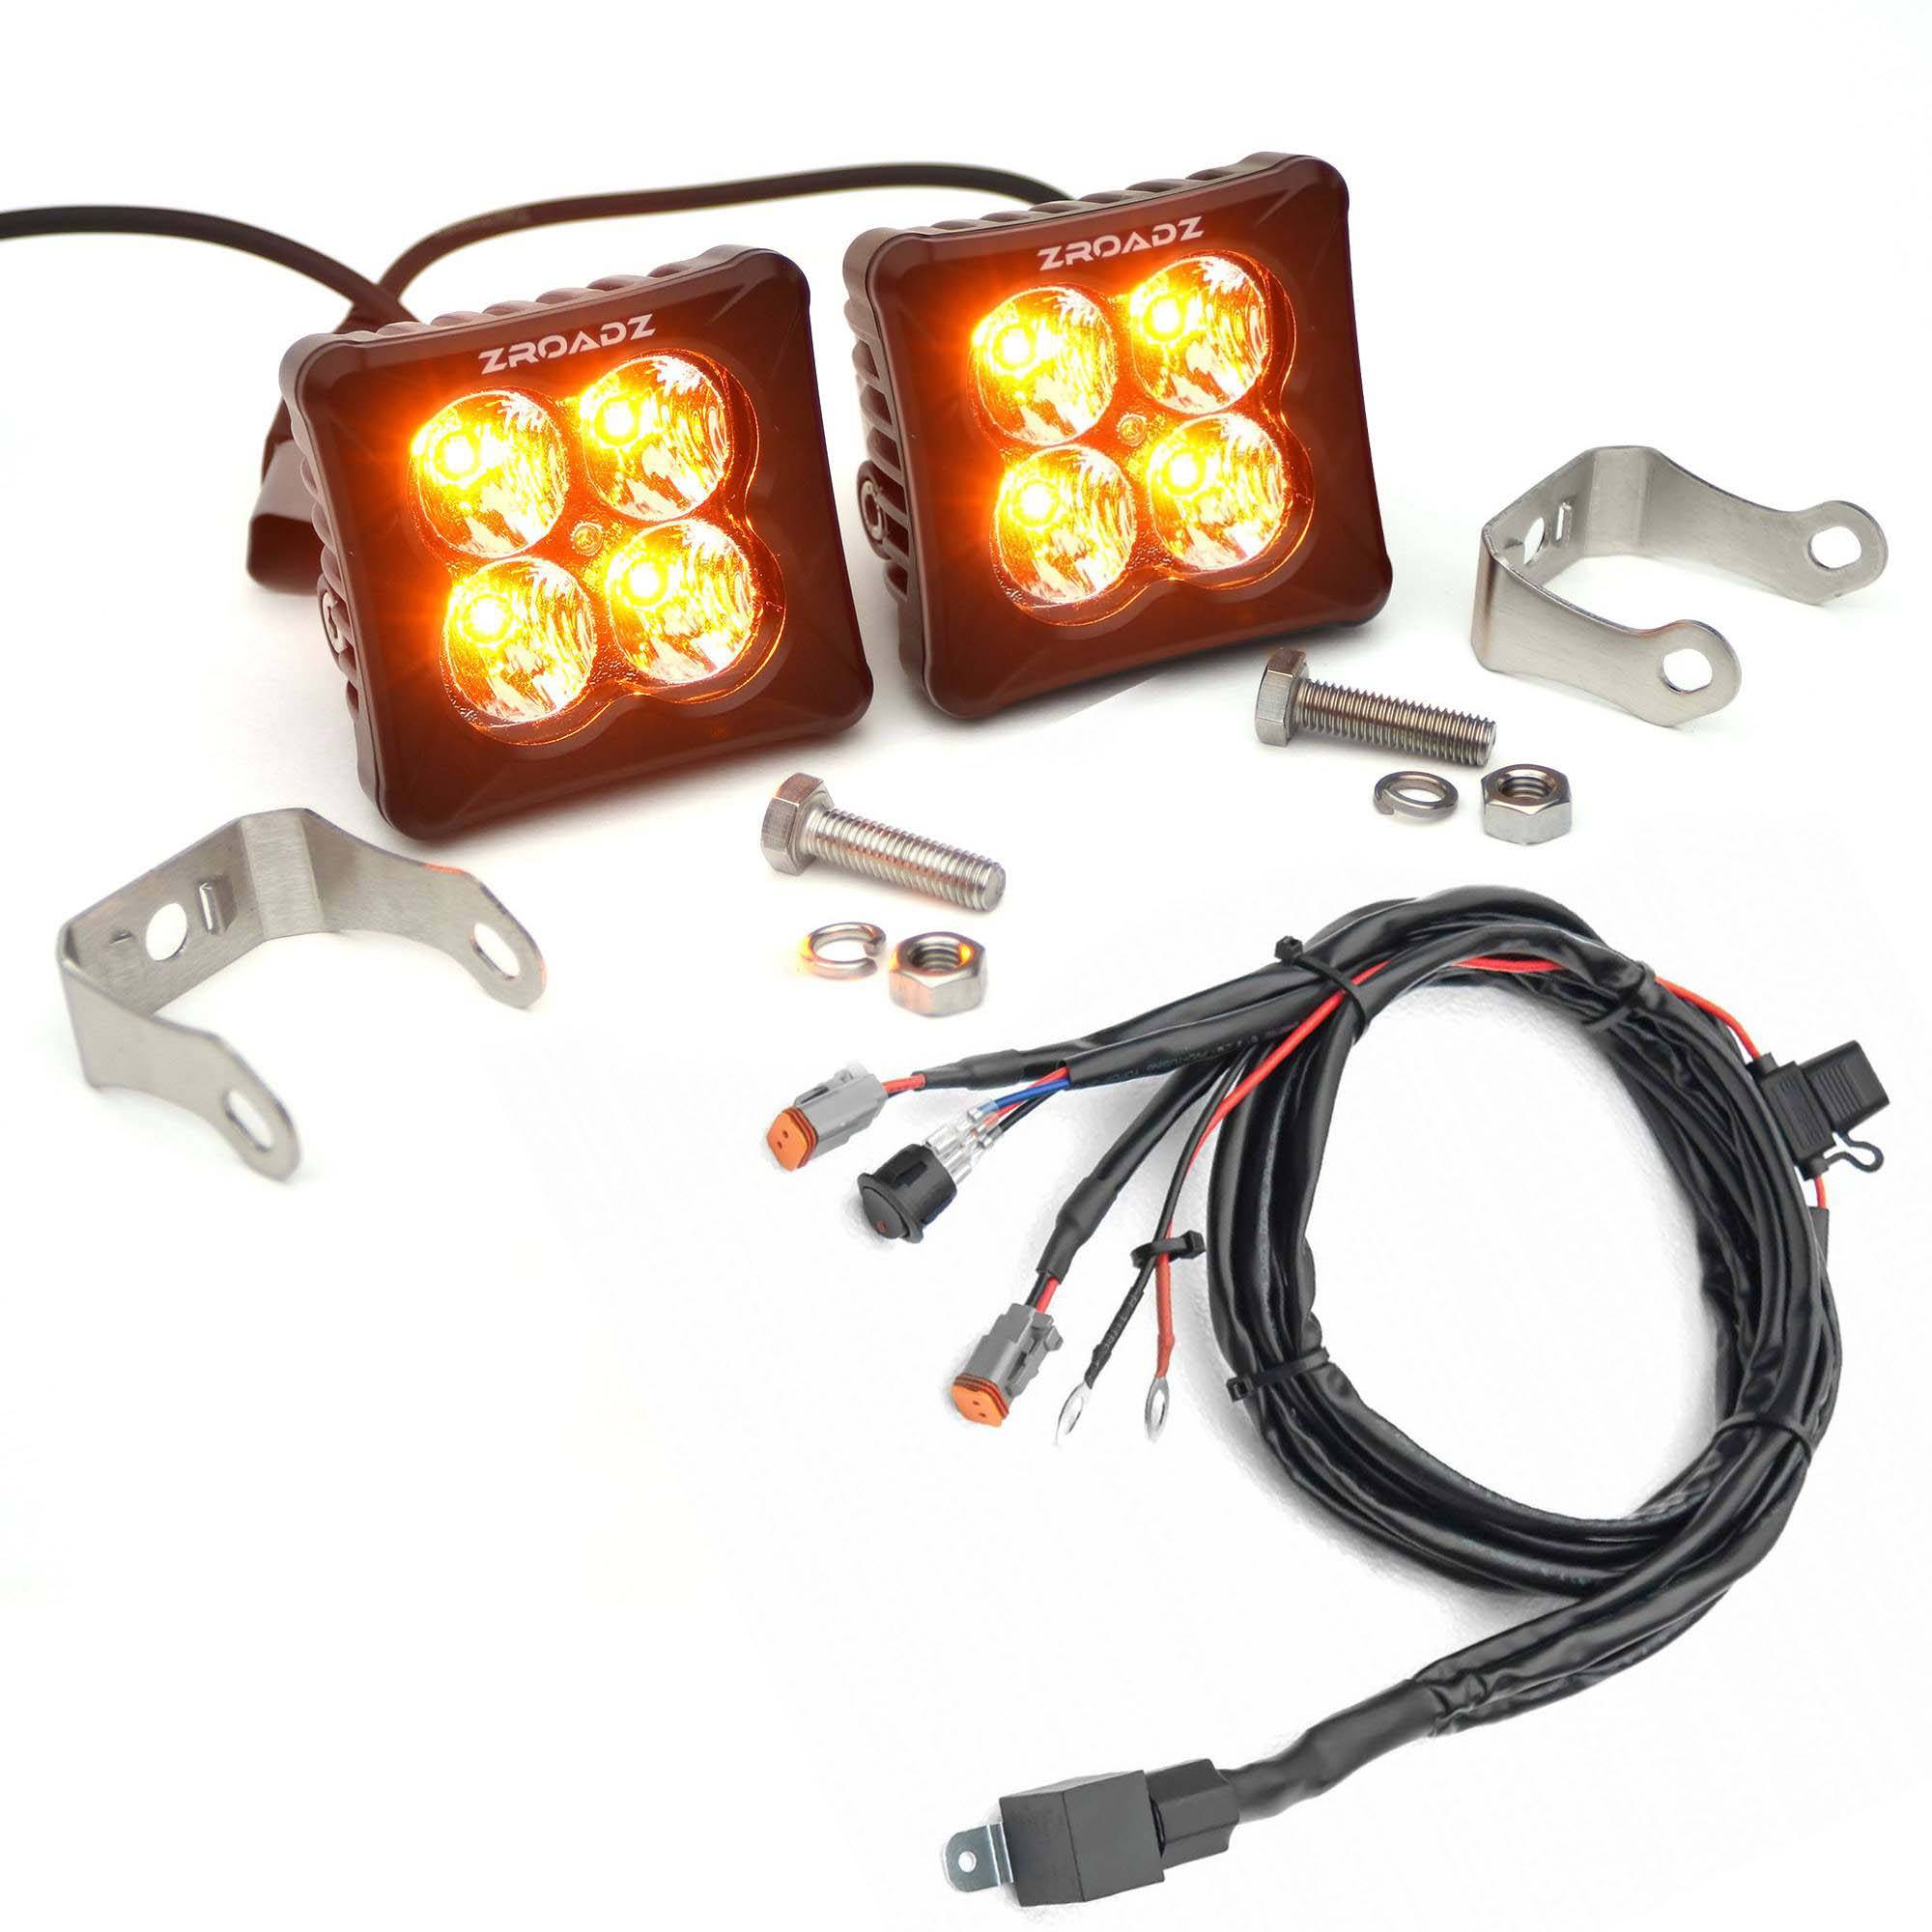 3 inch ZROADZ LED Light Pod Kit, G2 Series, Amber, Flood Beam, 2 Piece Kit With Wiring Harness - PN 